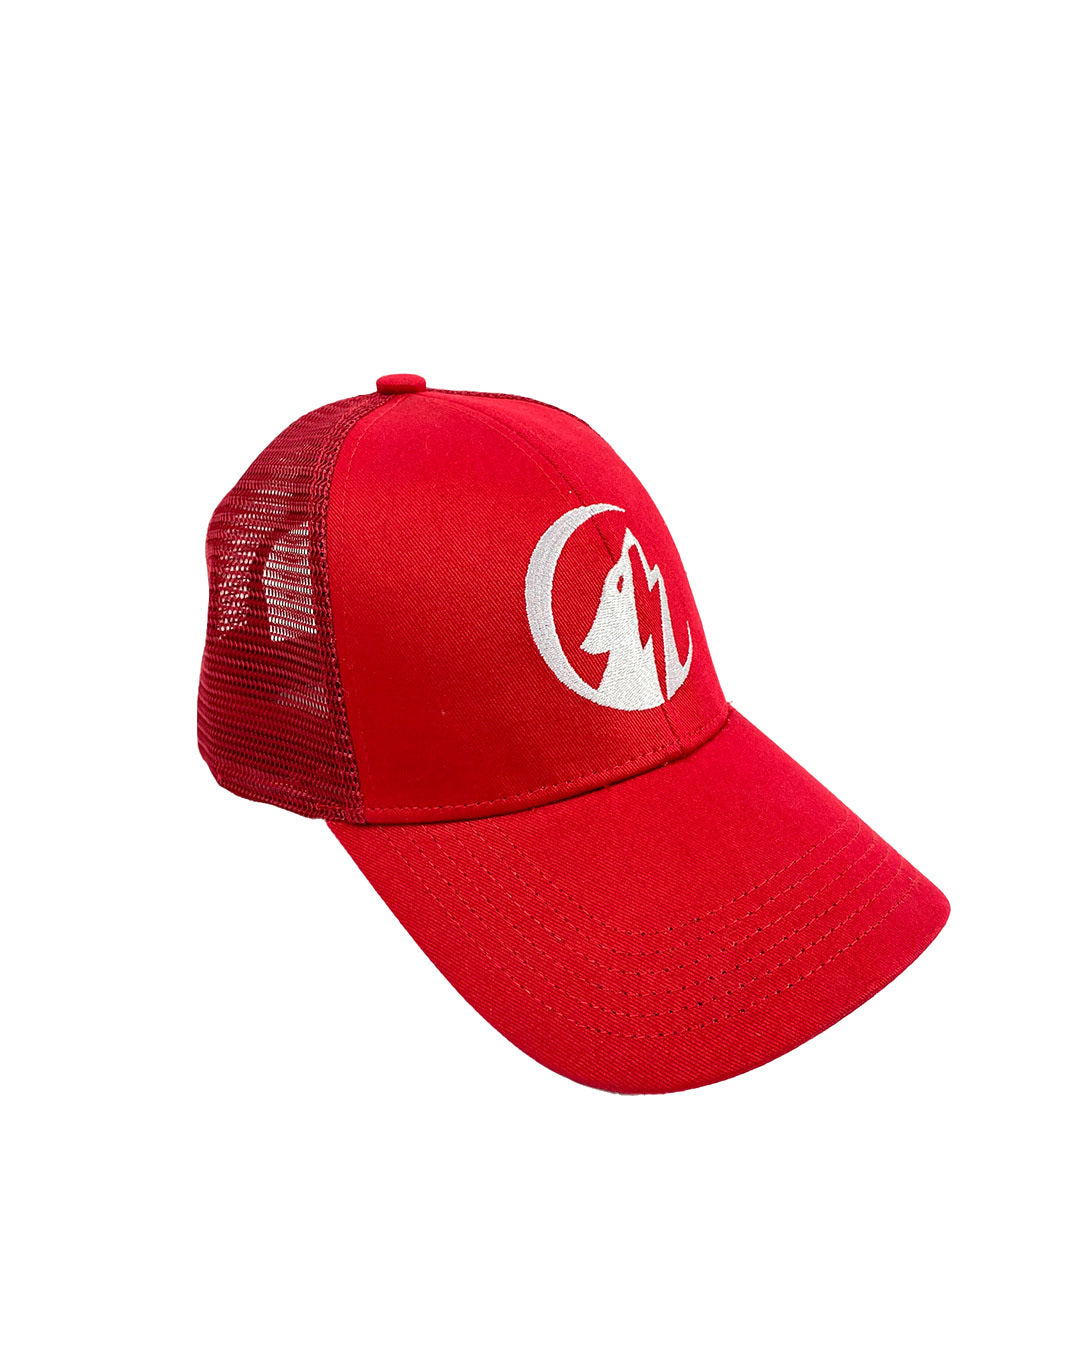 Wargo Legacy Caps